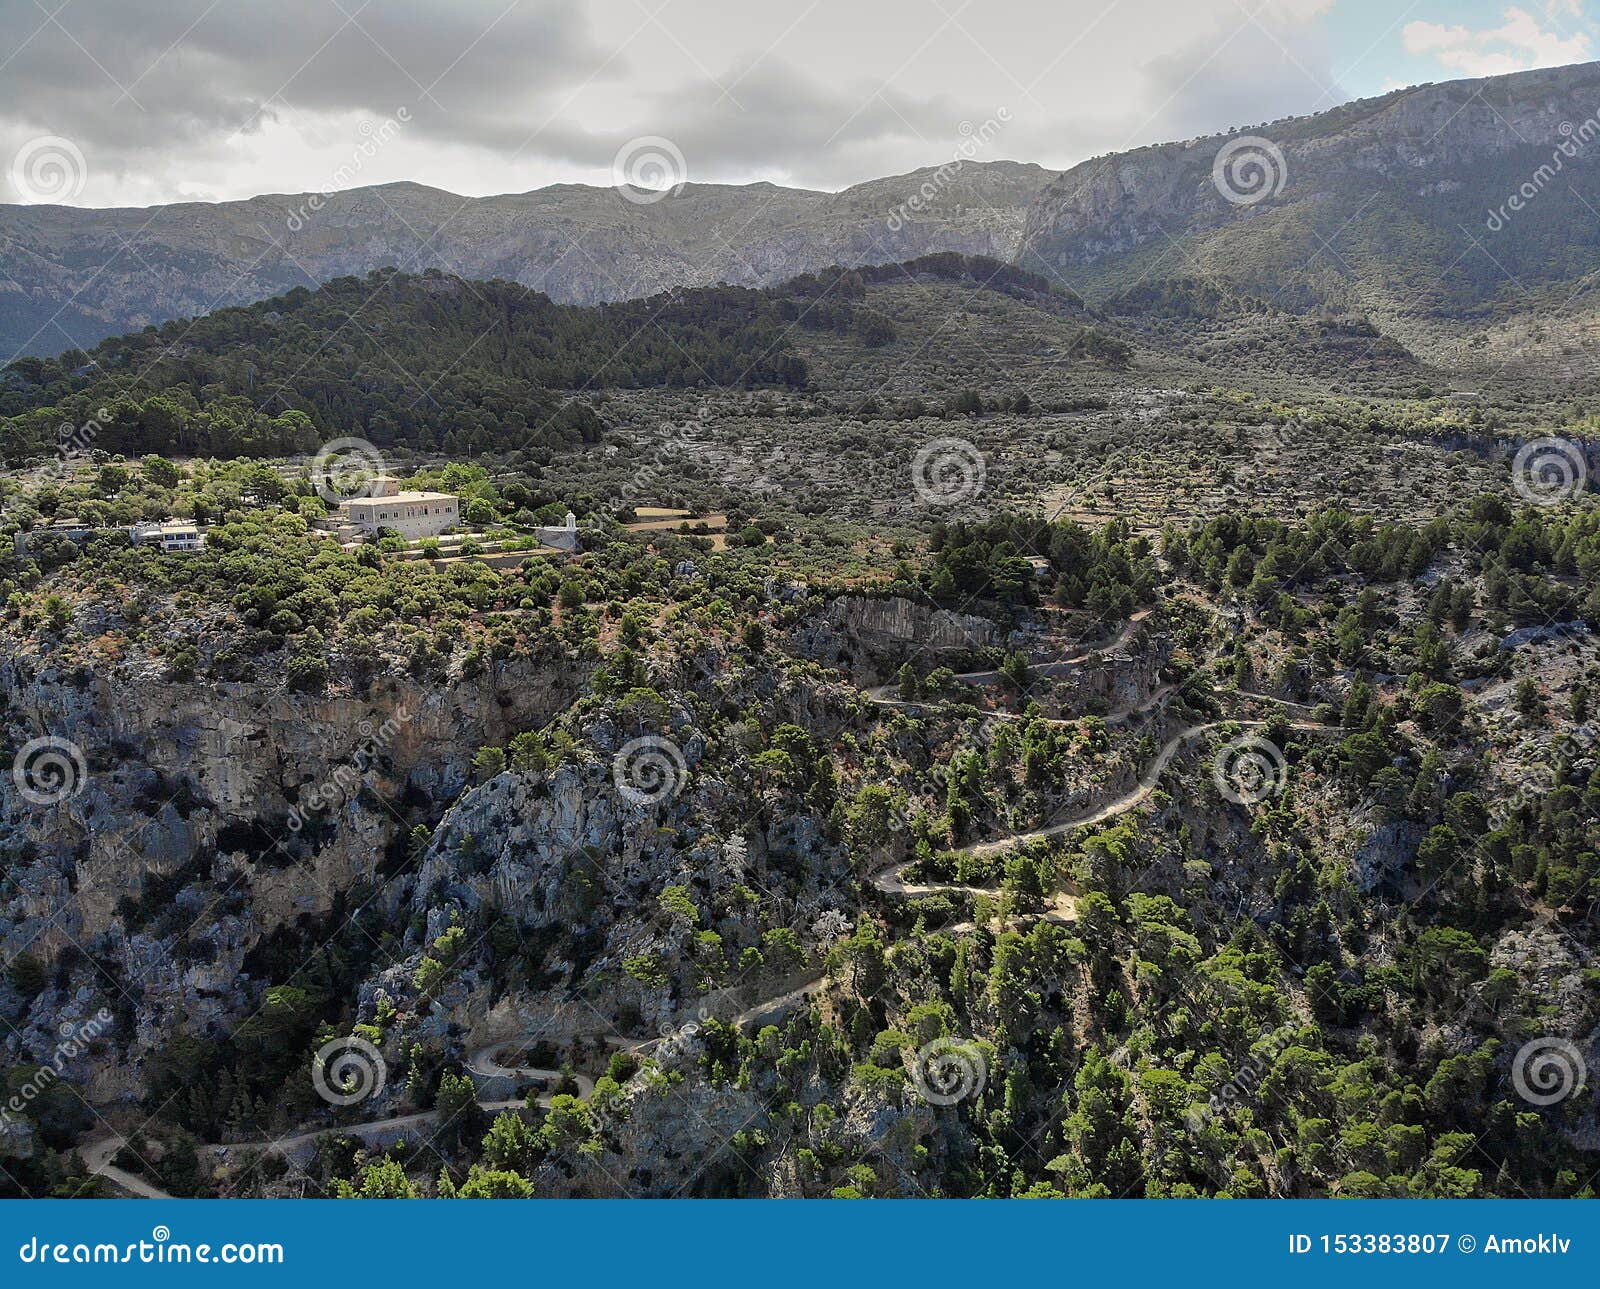 aerial photo son marroig countryside winding country road, palma de mallorca, balearic islands, spain